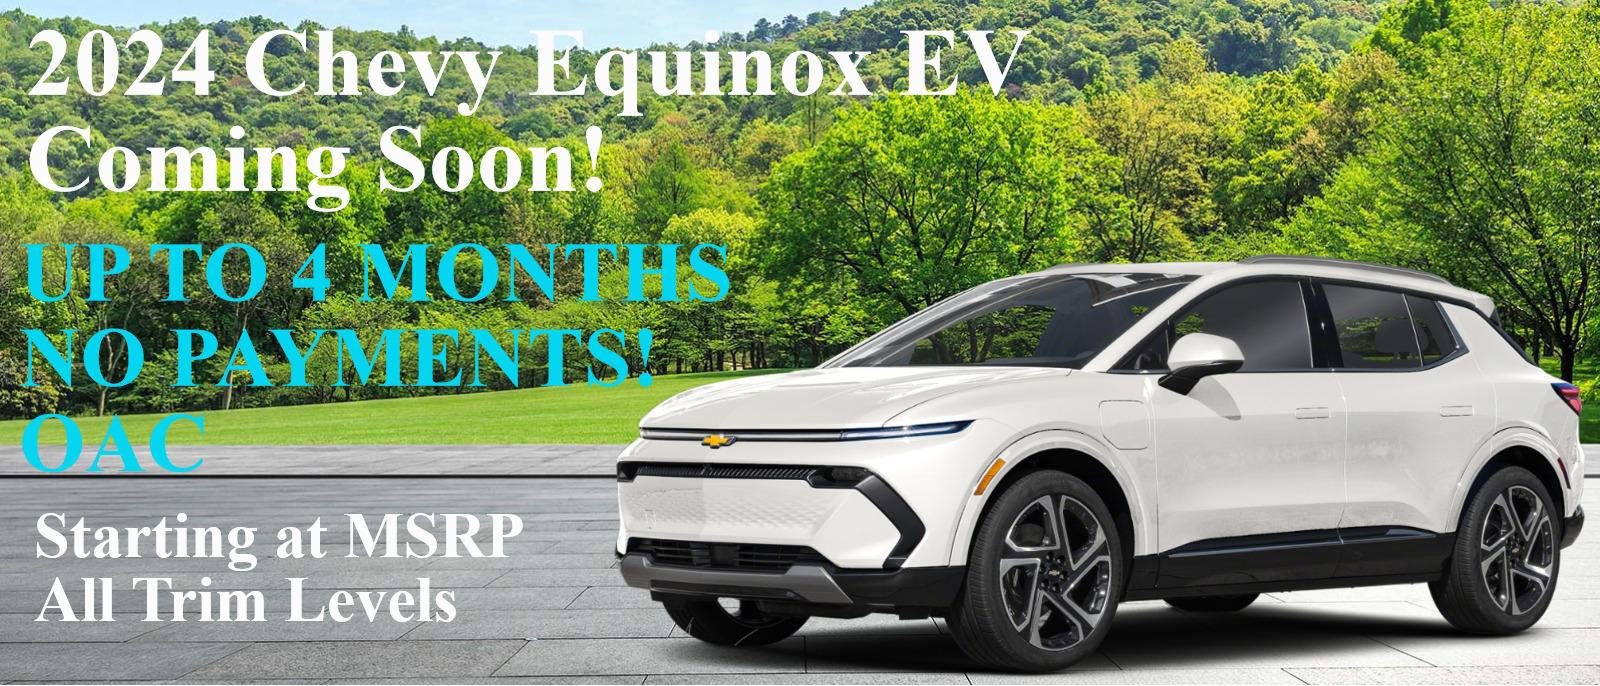 Equinox EV at McLoughlin Chevrolet